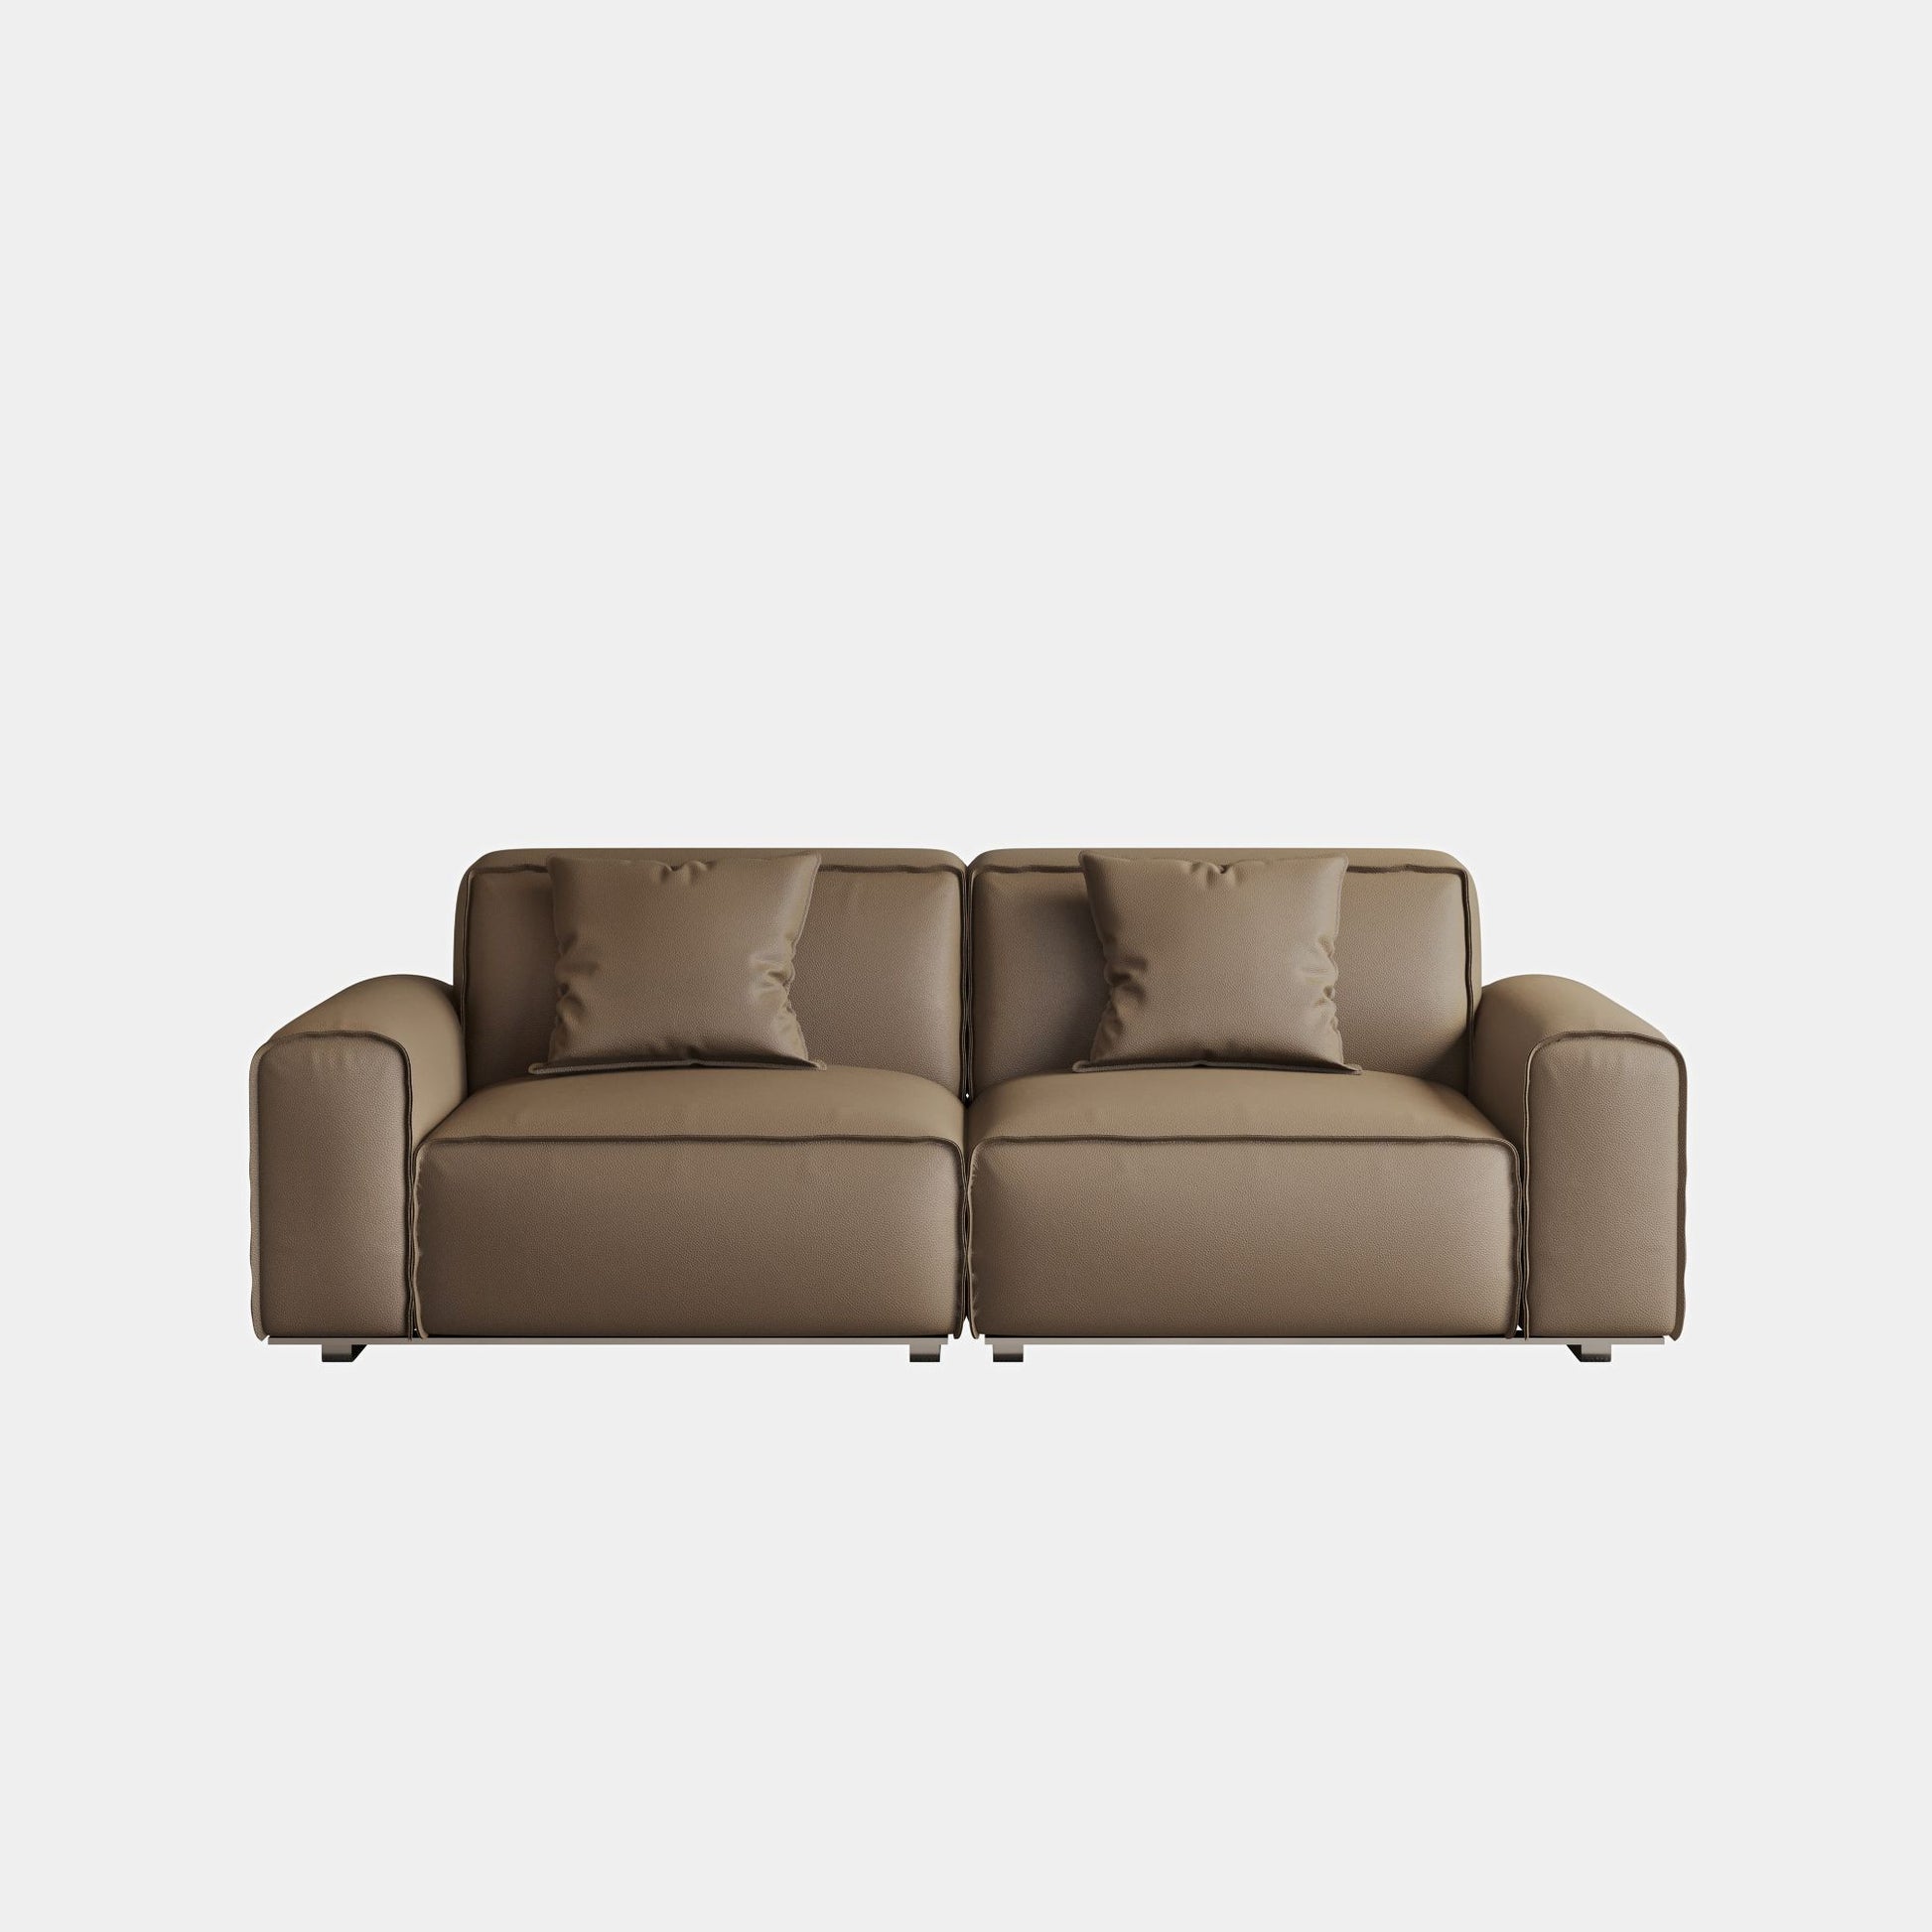 Colby dark brown top grain half leather 2 seat sofa